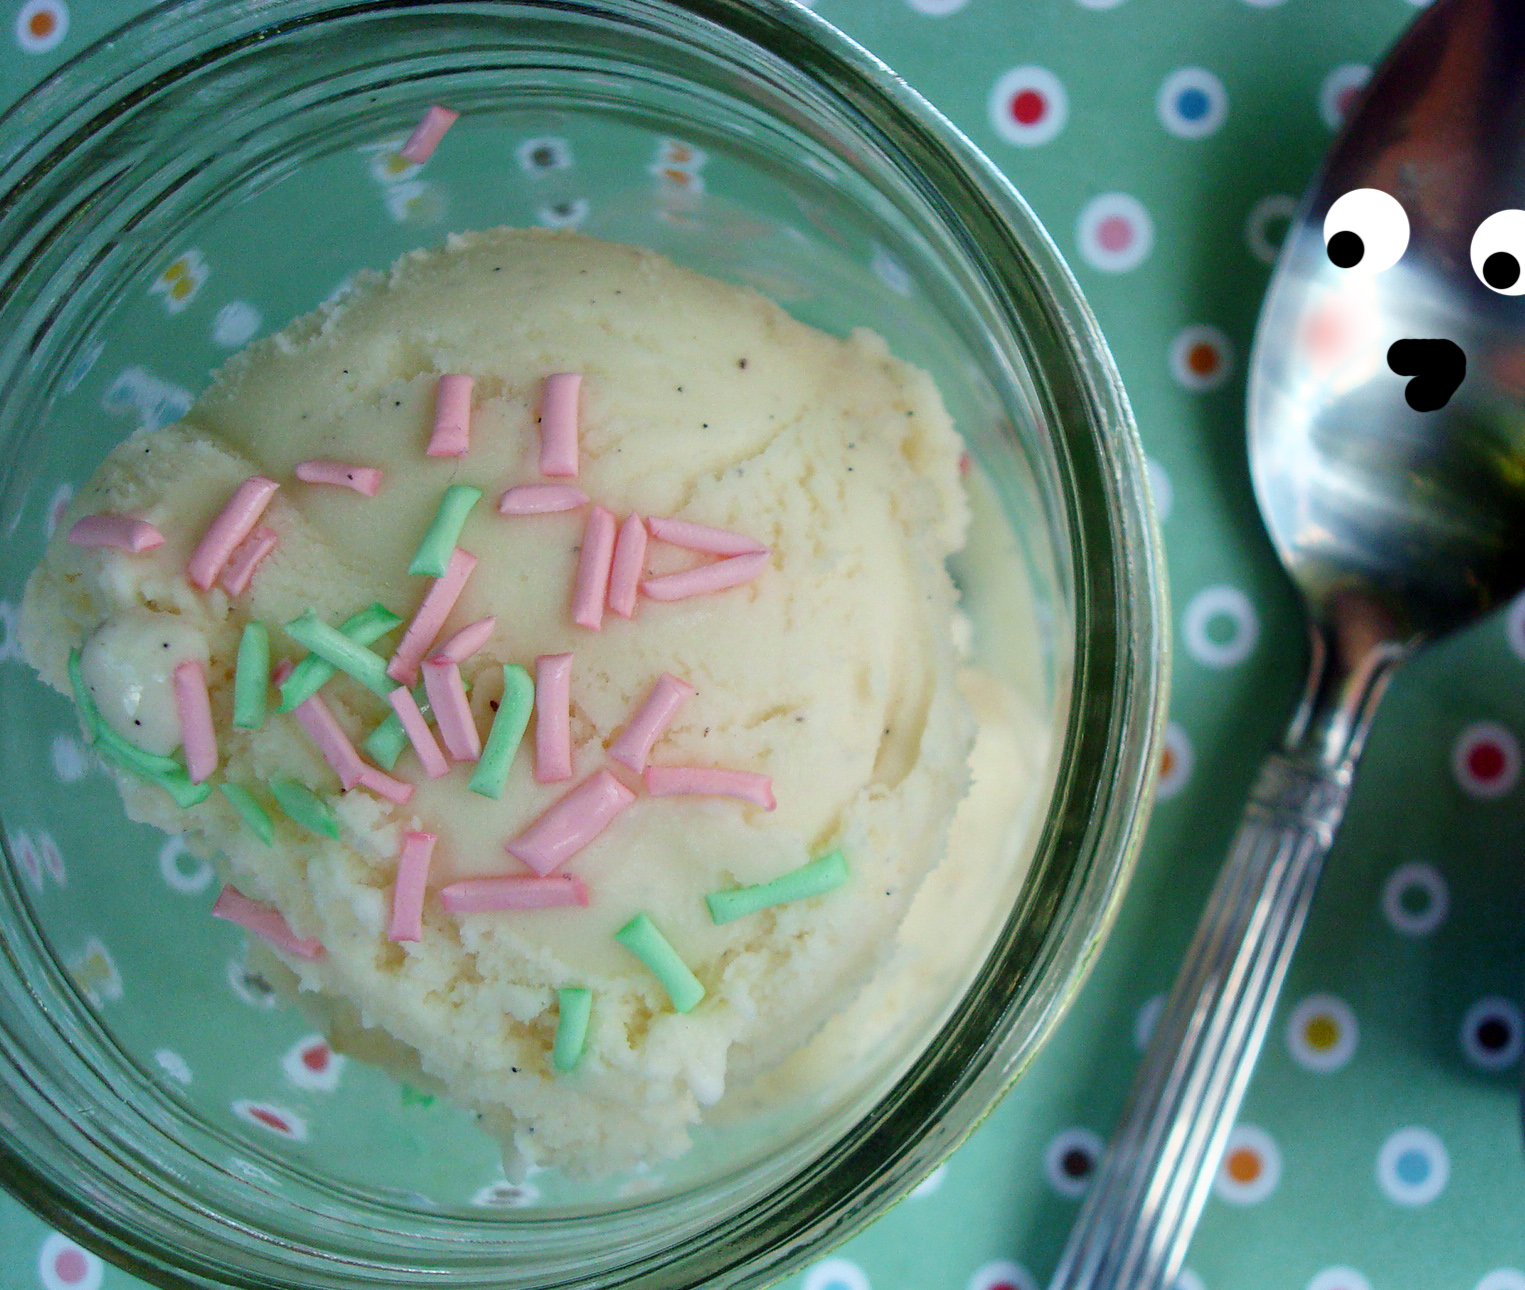 Sprinkles on Ice Cream, Spoon with Cartoon Face